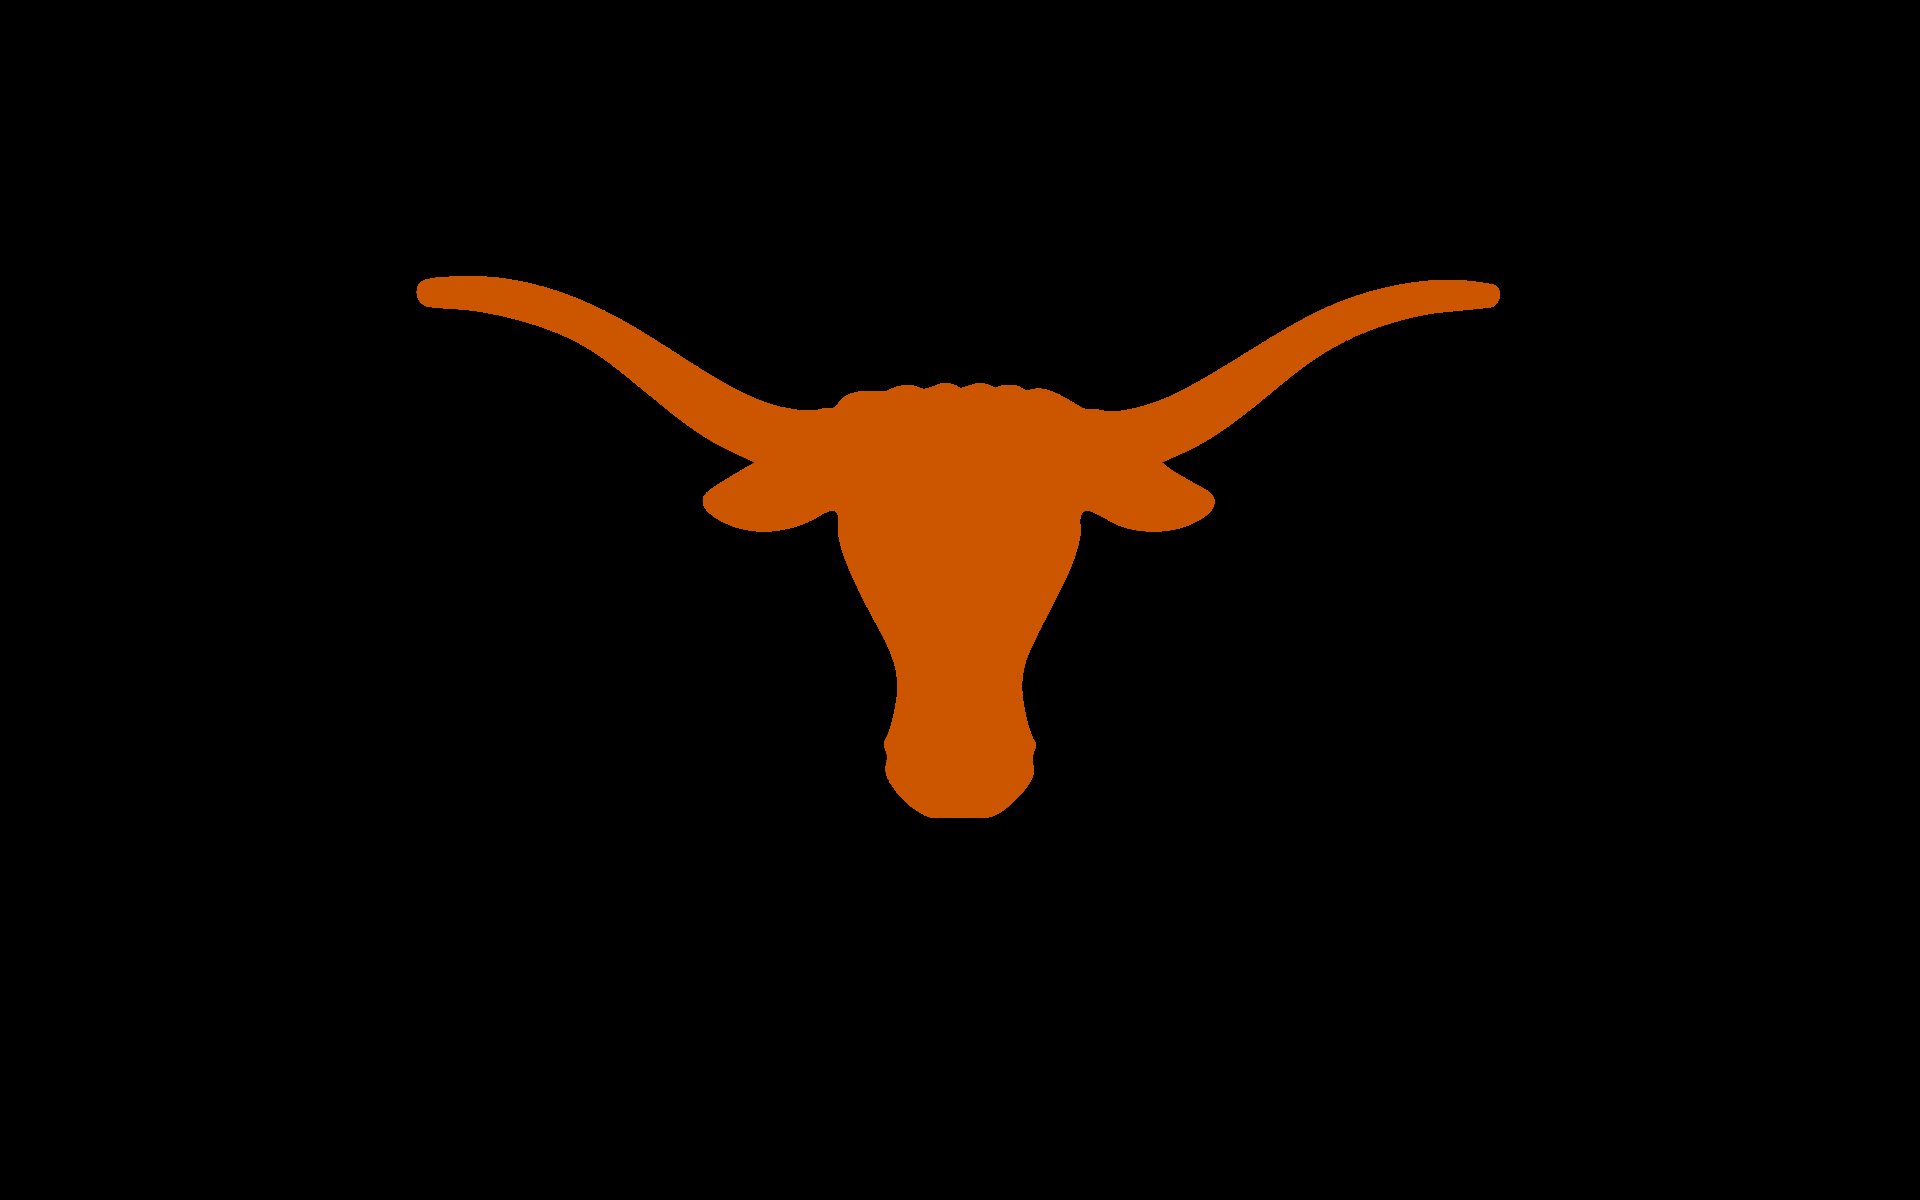 Texas longhorns dildo